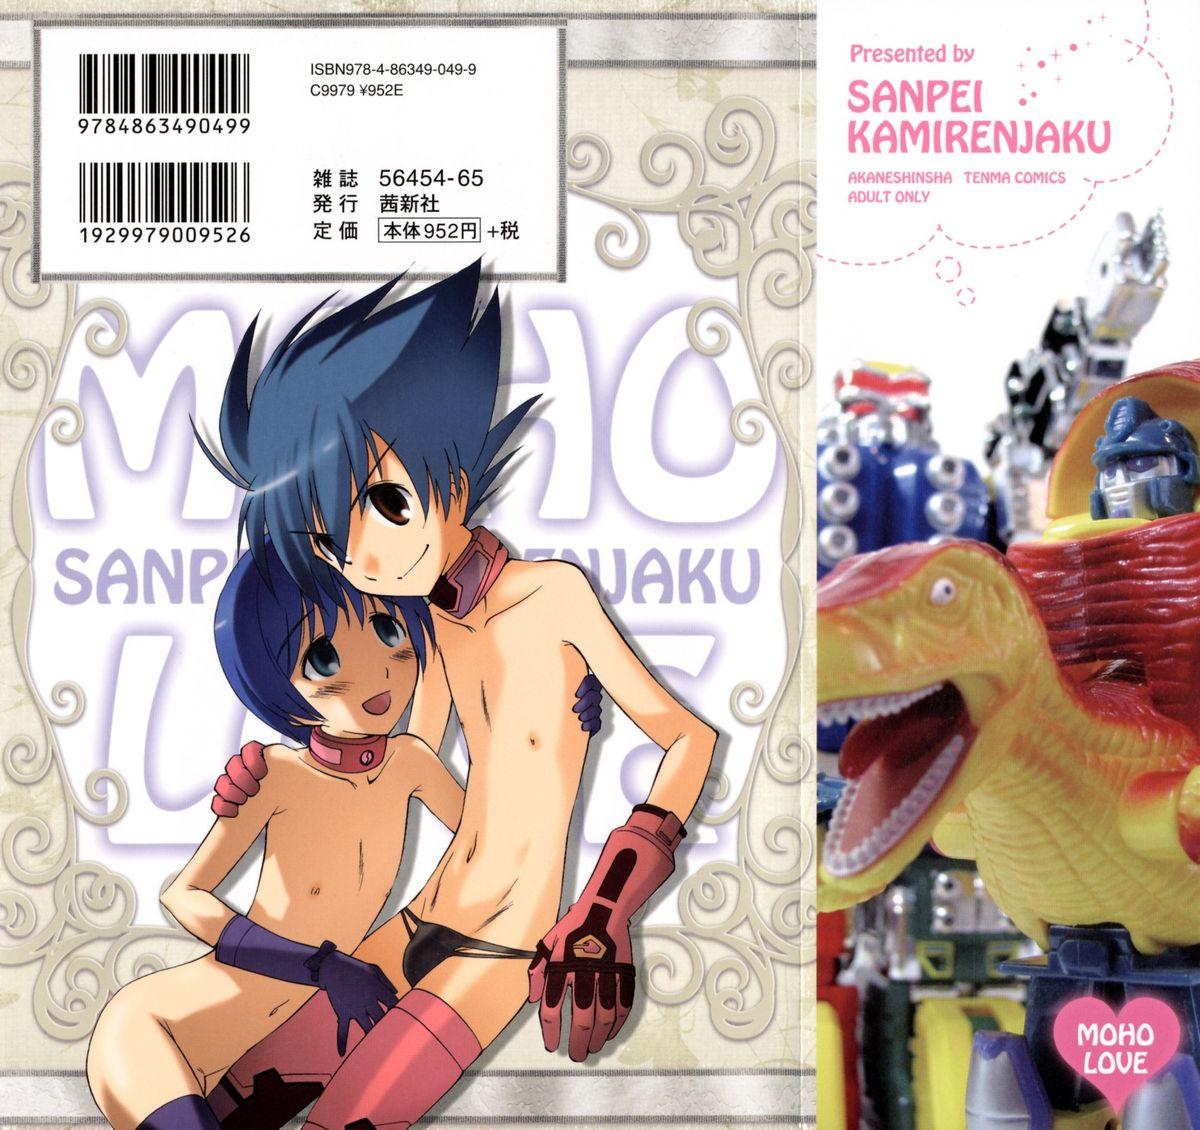 Kamirenjaku Sanpei - Moho Love 1